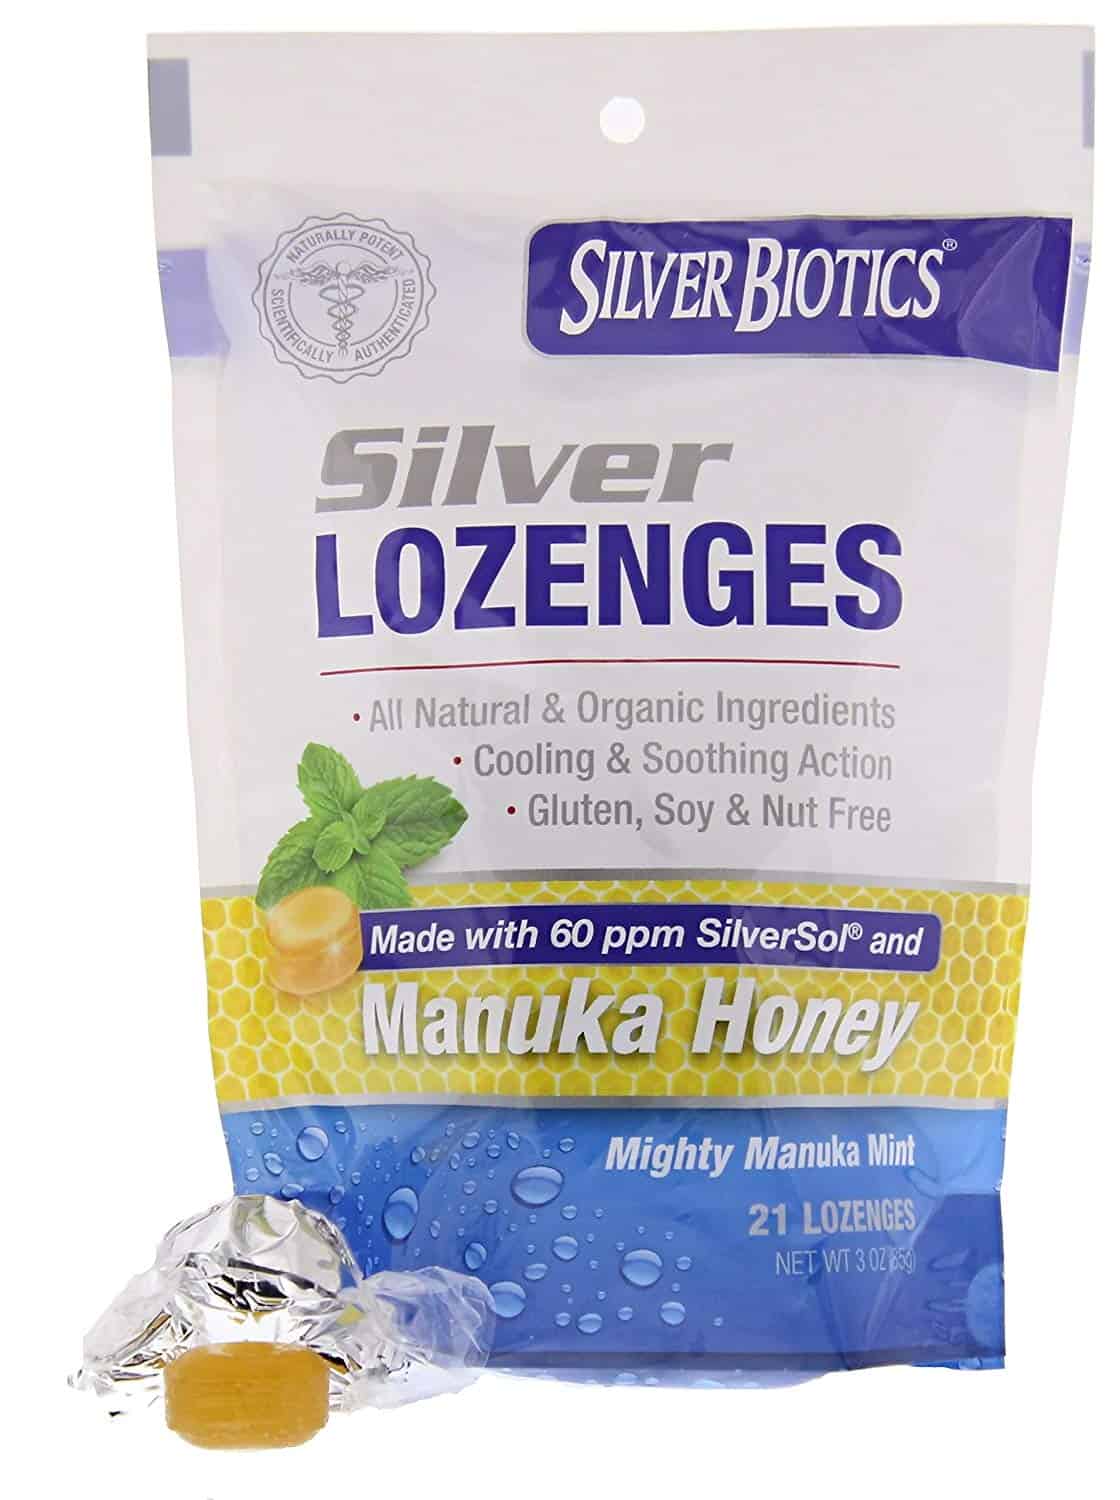 Holiday gift silver biotics lozengers